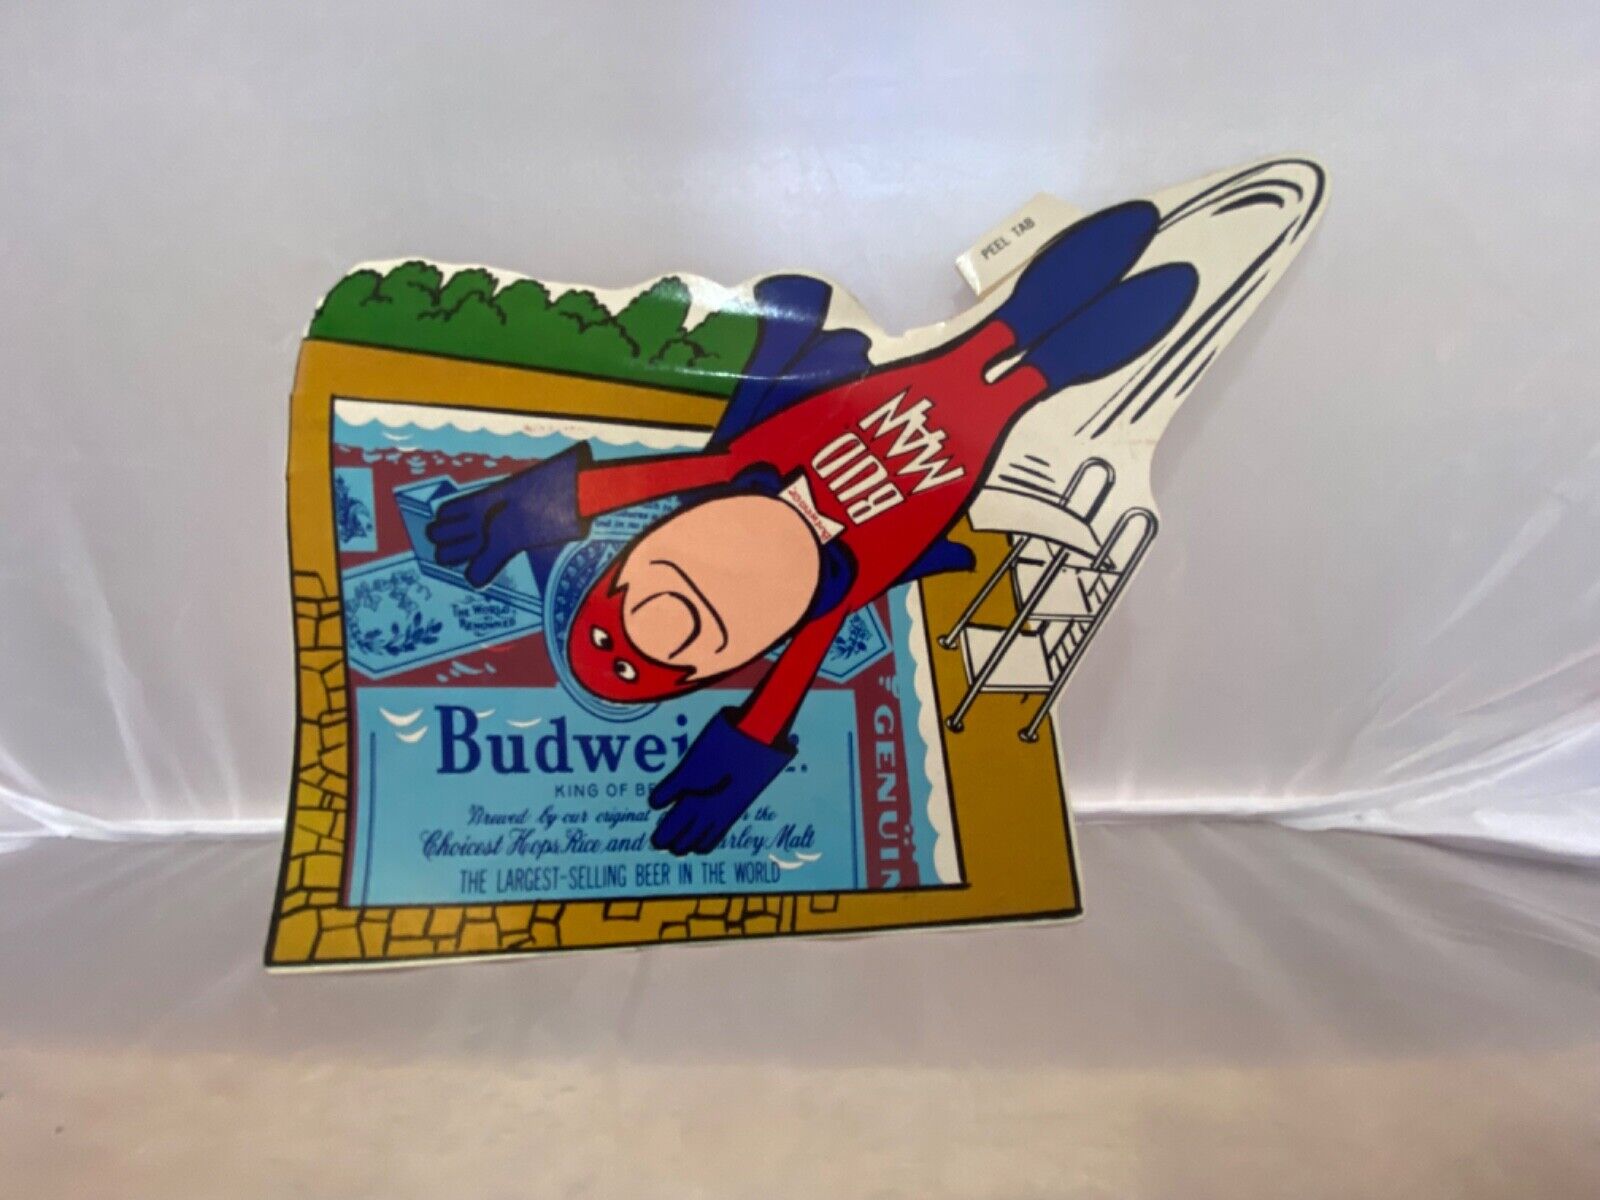 Bud Man Budwieser sticker